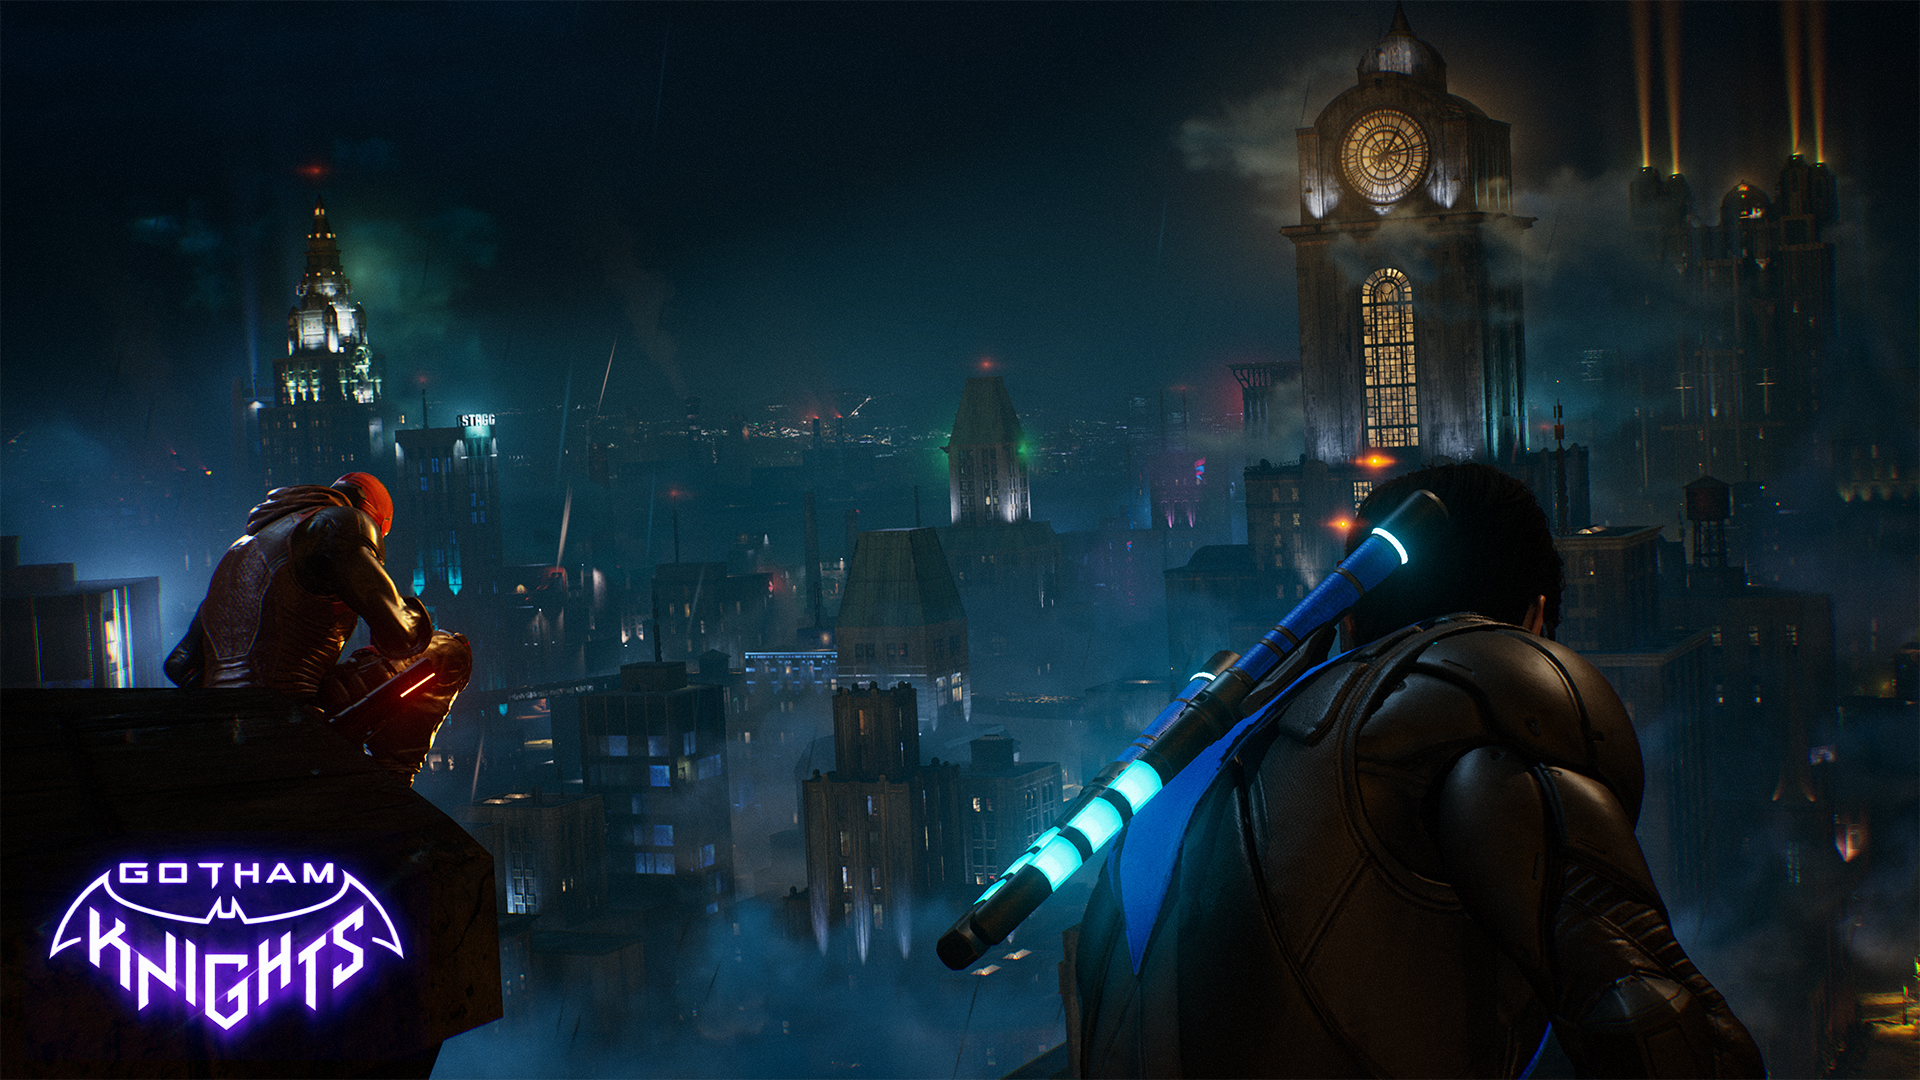 WB Games - Gotham Knights & Hogwarts Legacy 2022 Confirmed After All